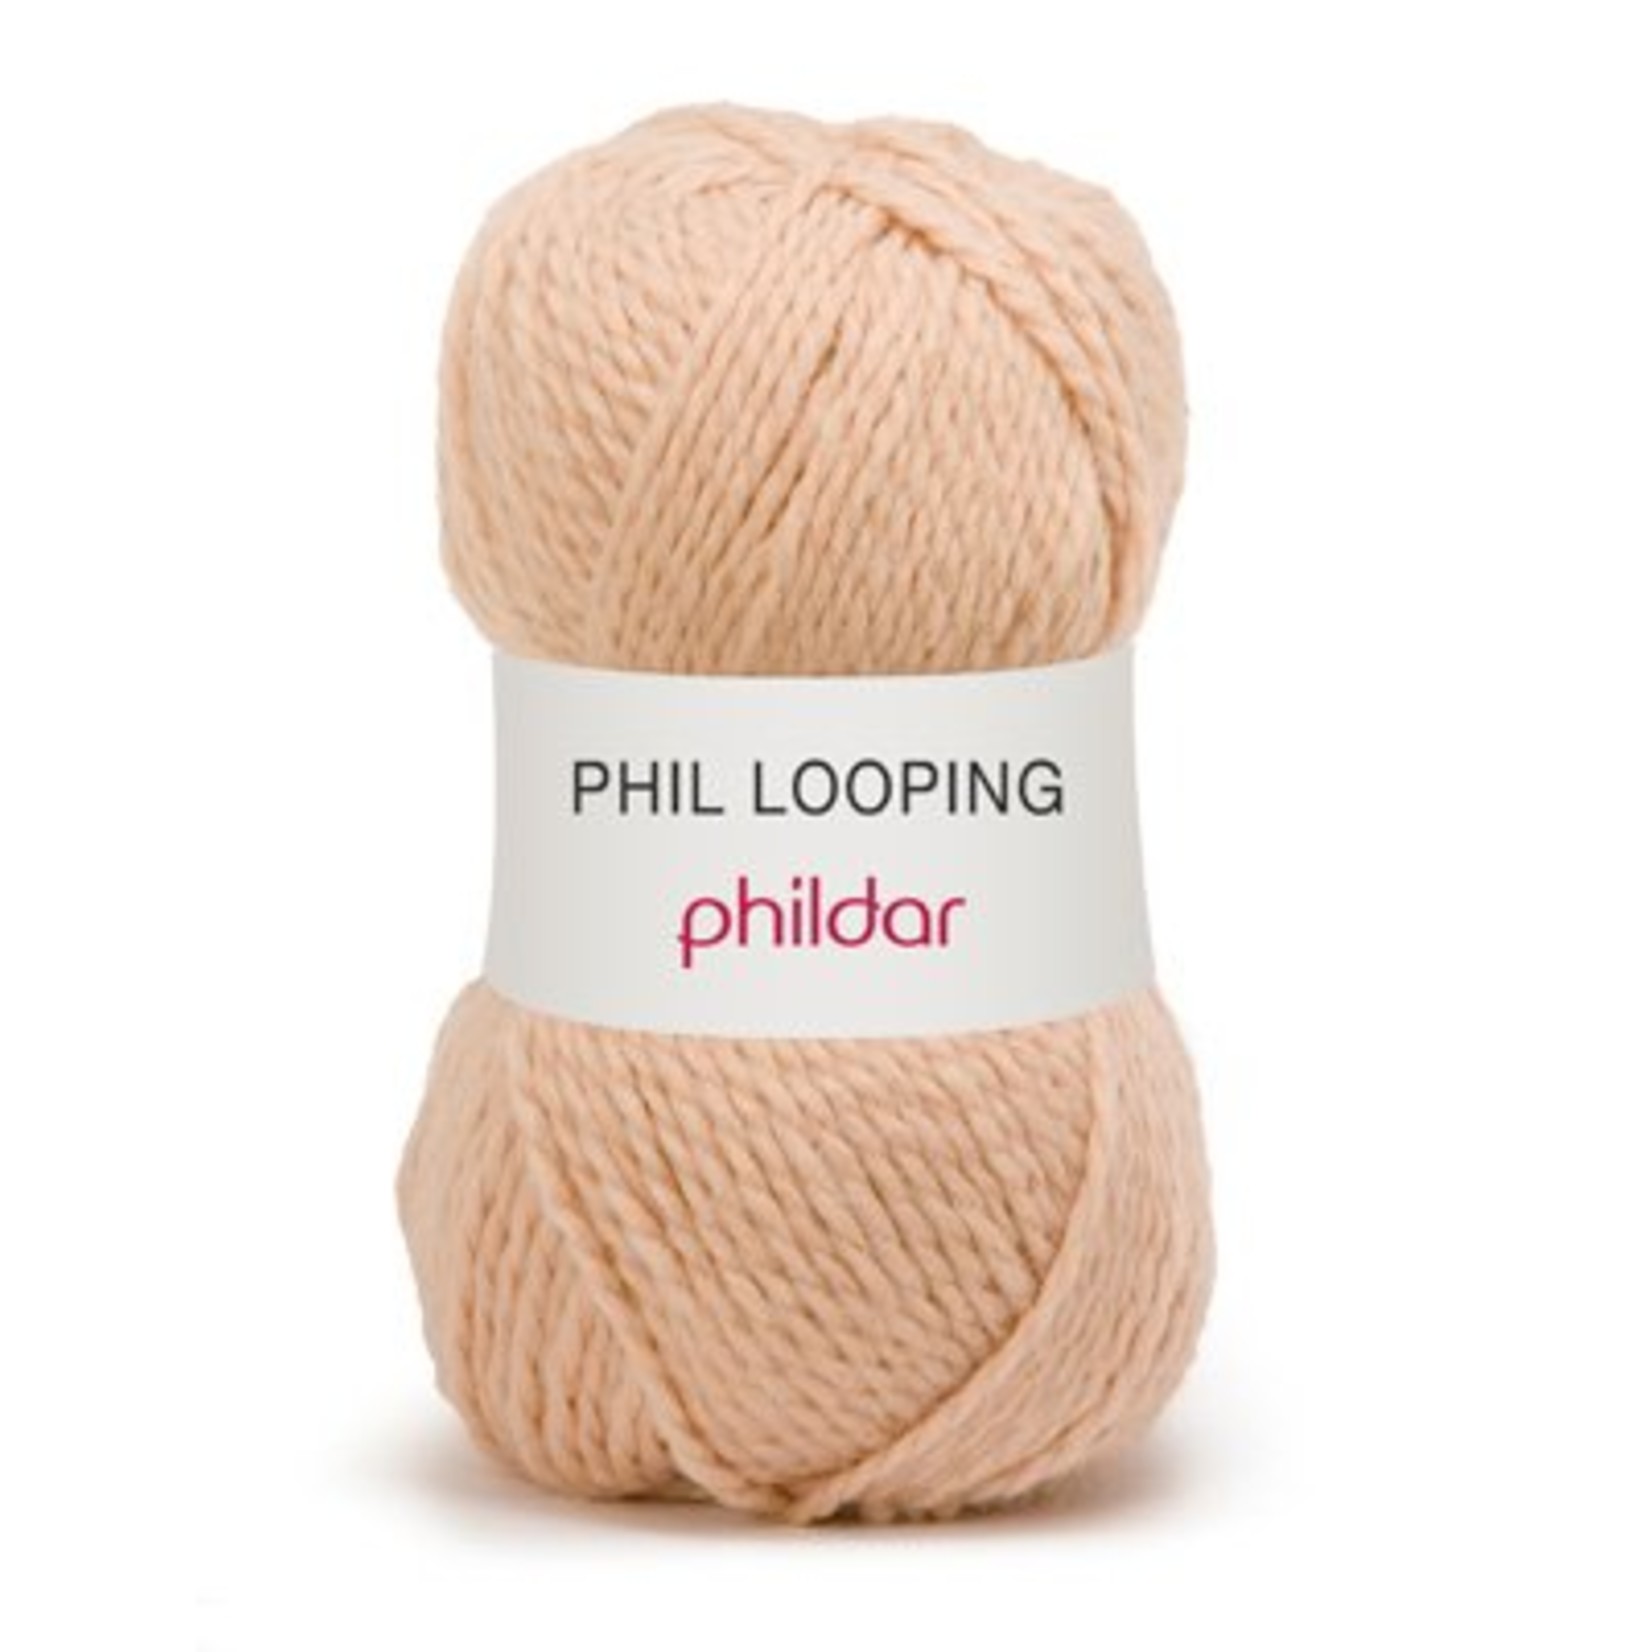 Phildar Phil Looping Biche